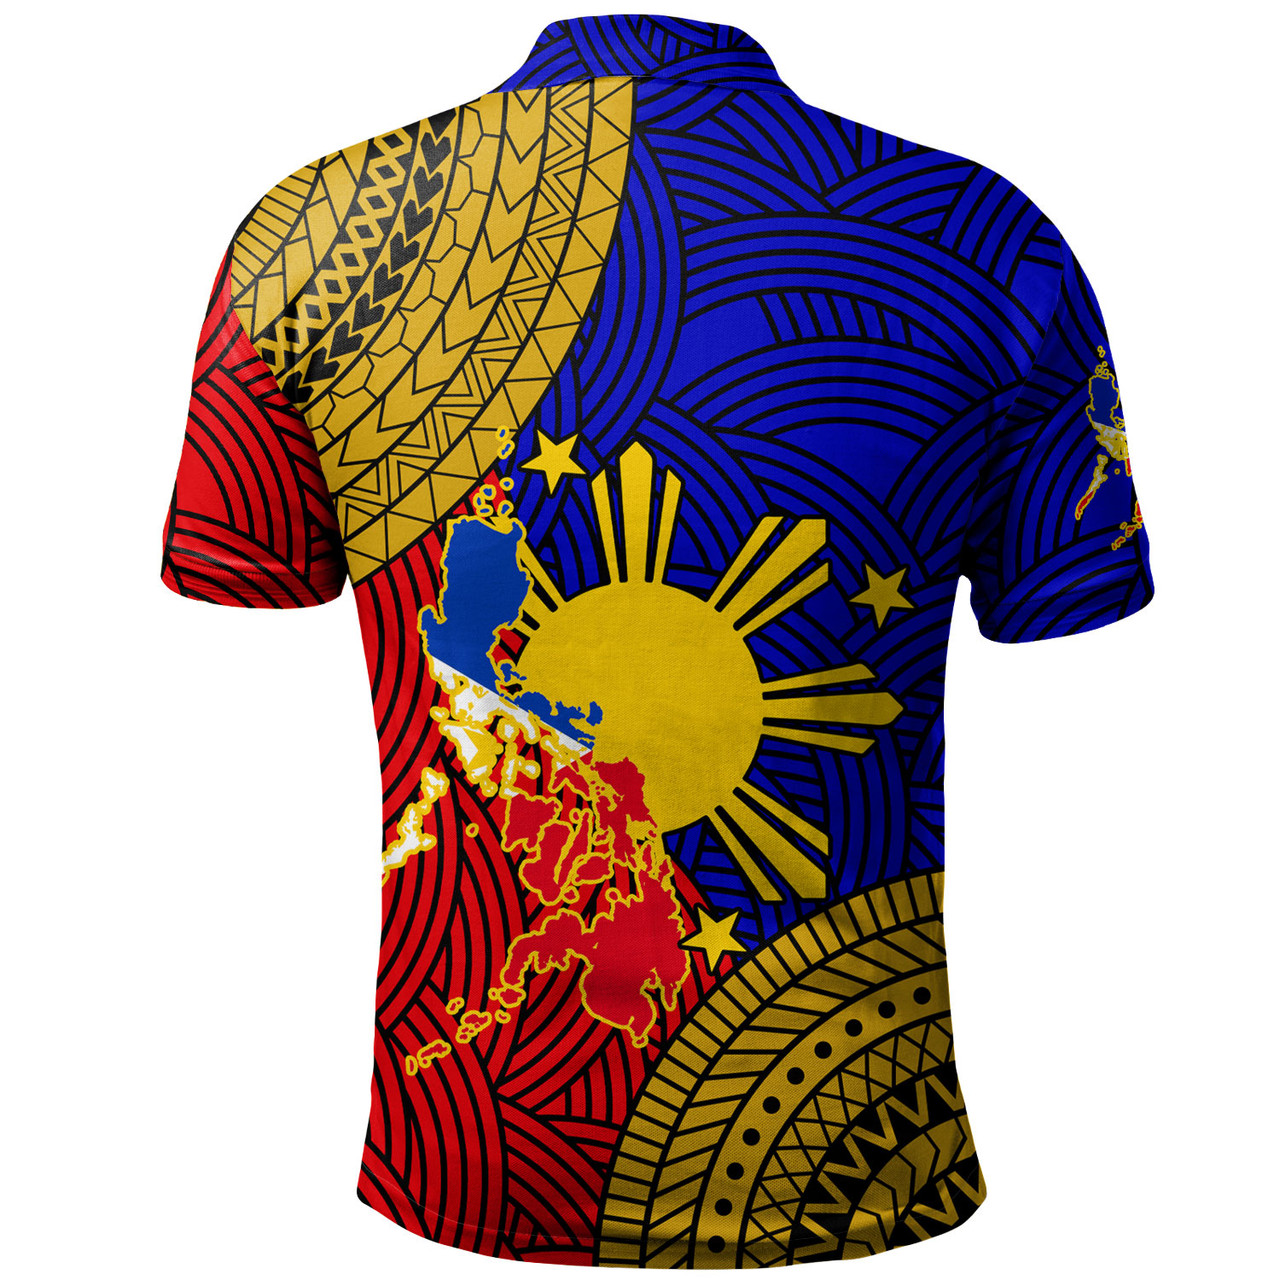 Philippines Filipinos Custom Personalised Polo Shirt Philippines Pride